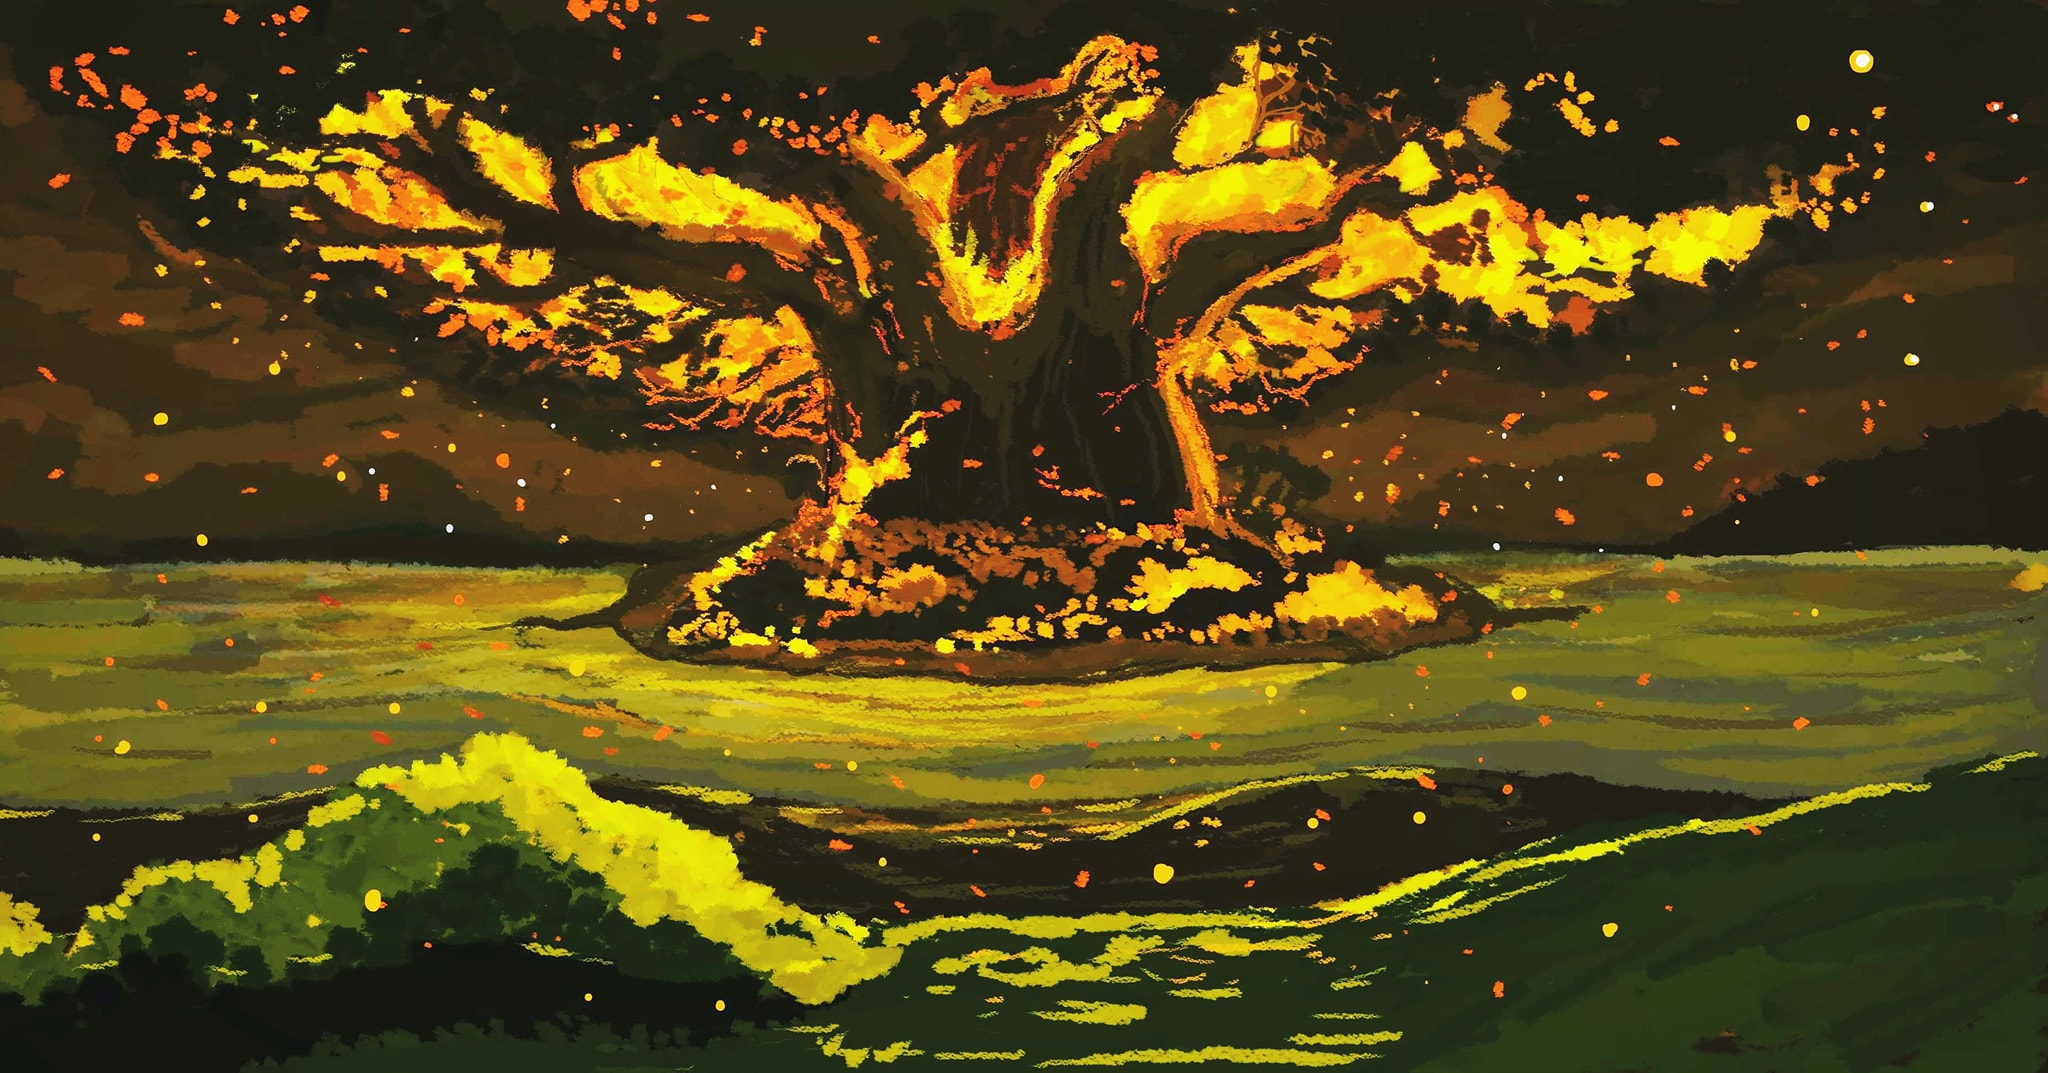 World Tree on Fire by DarkDragon11